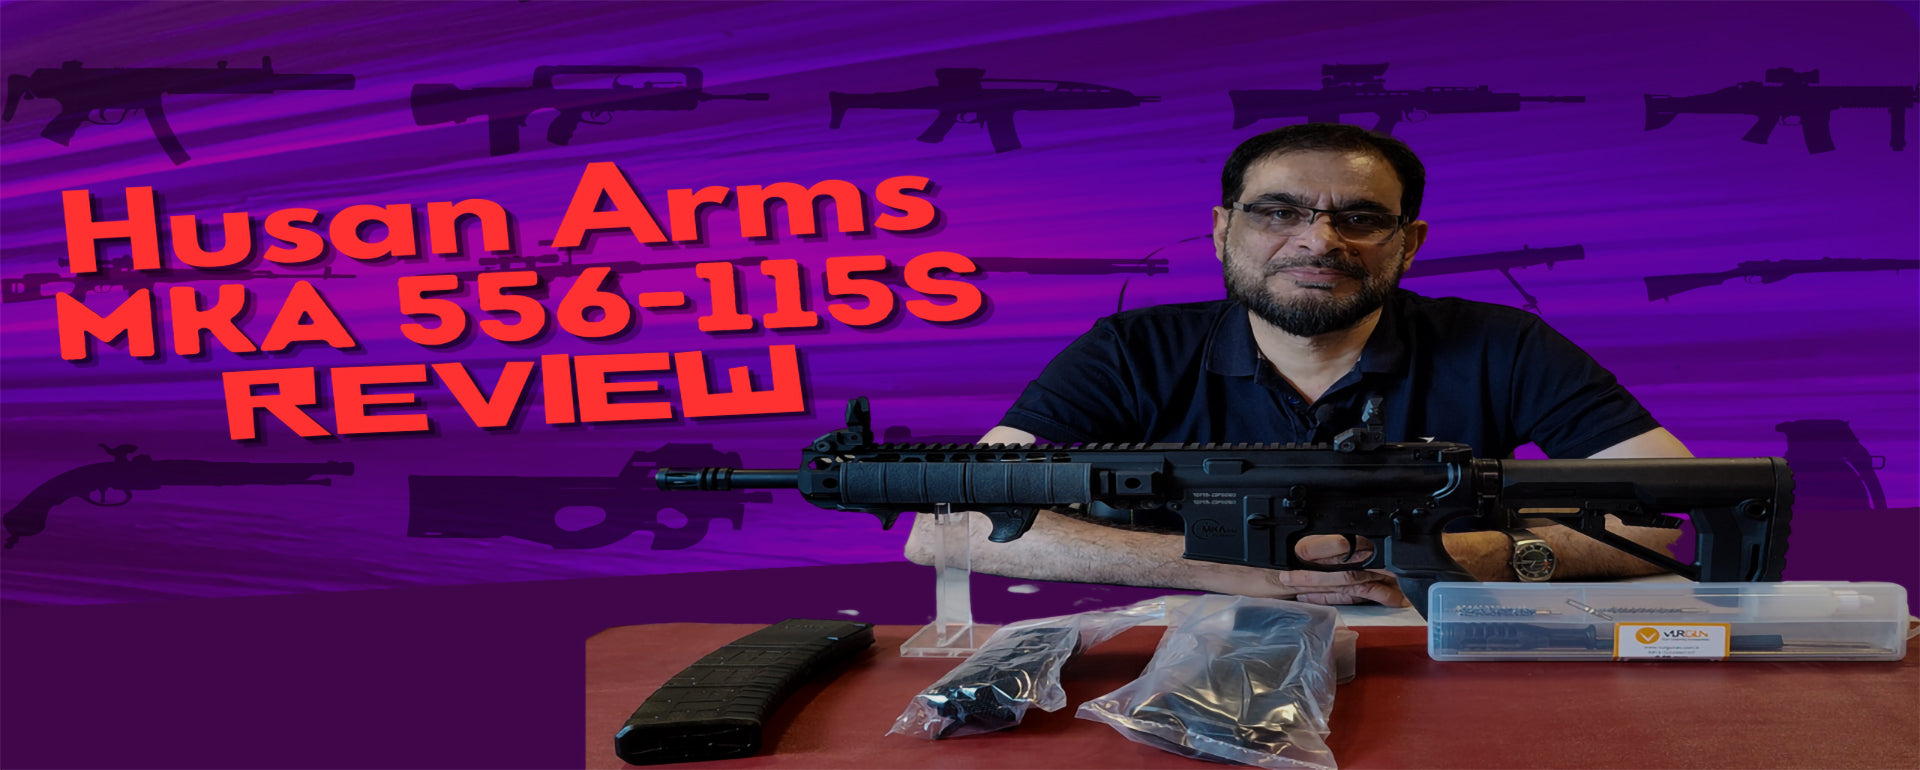 Husan Arms MKA 556 115s